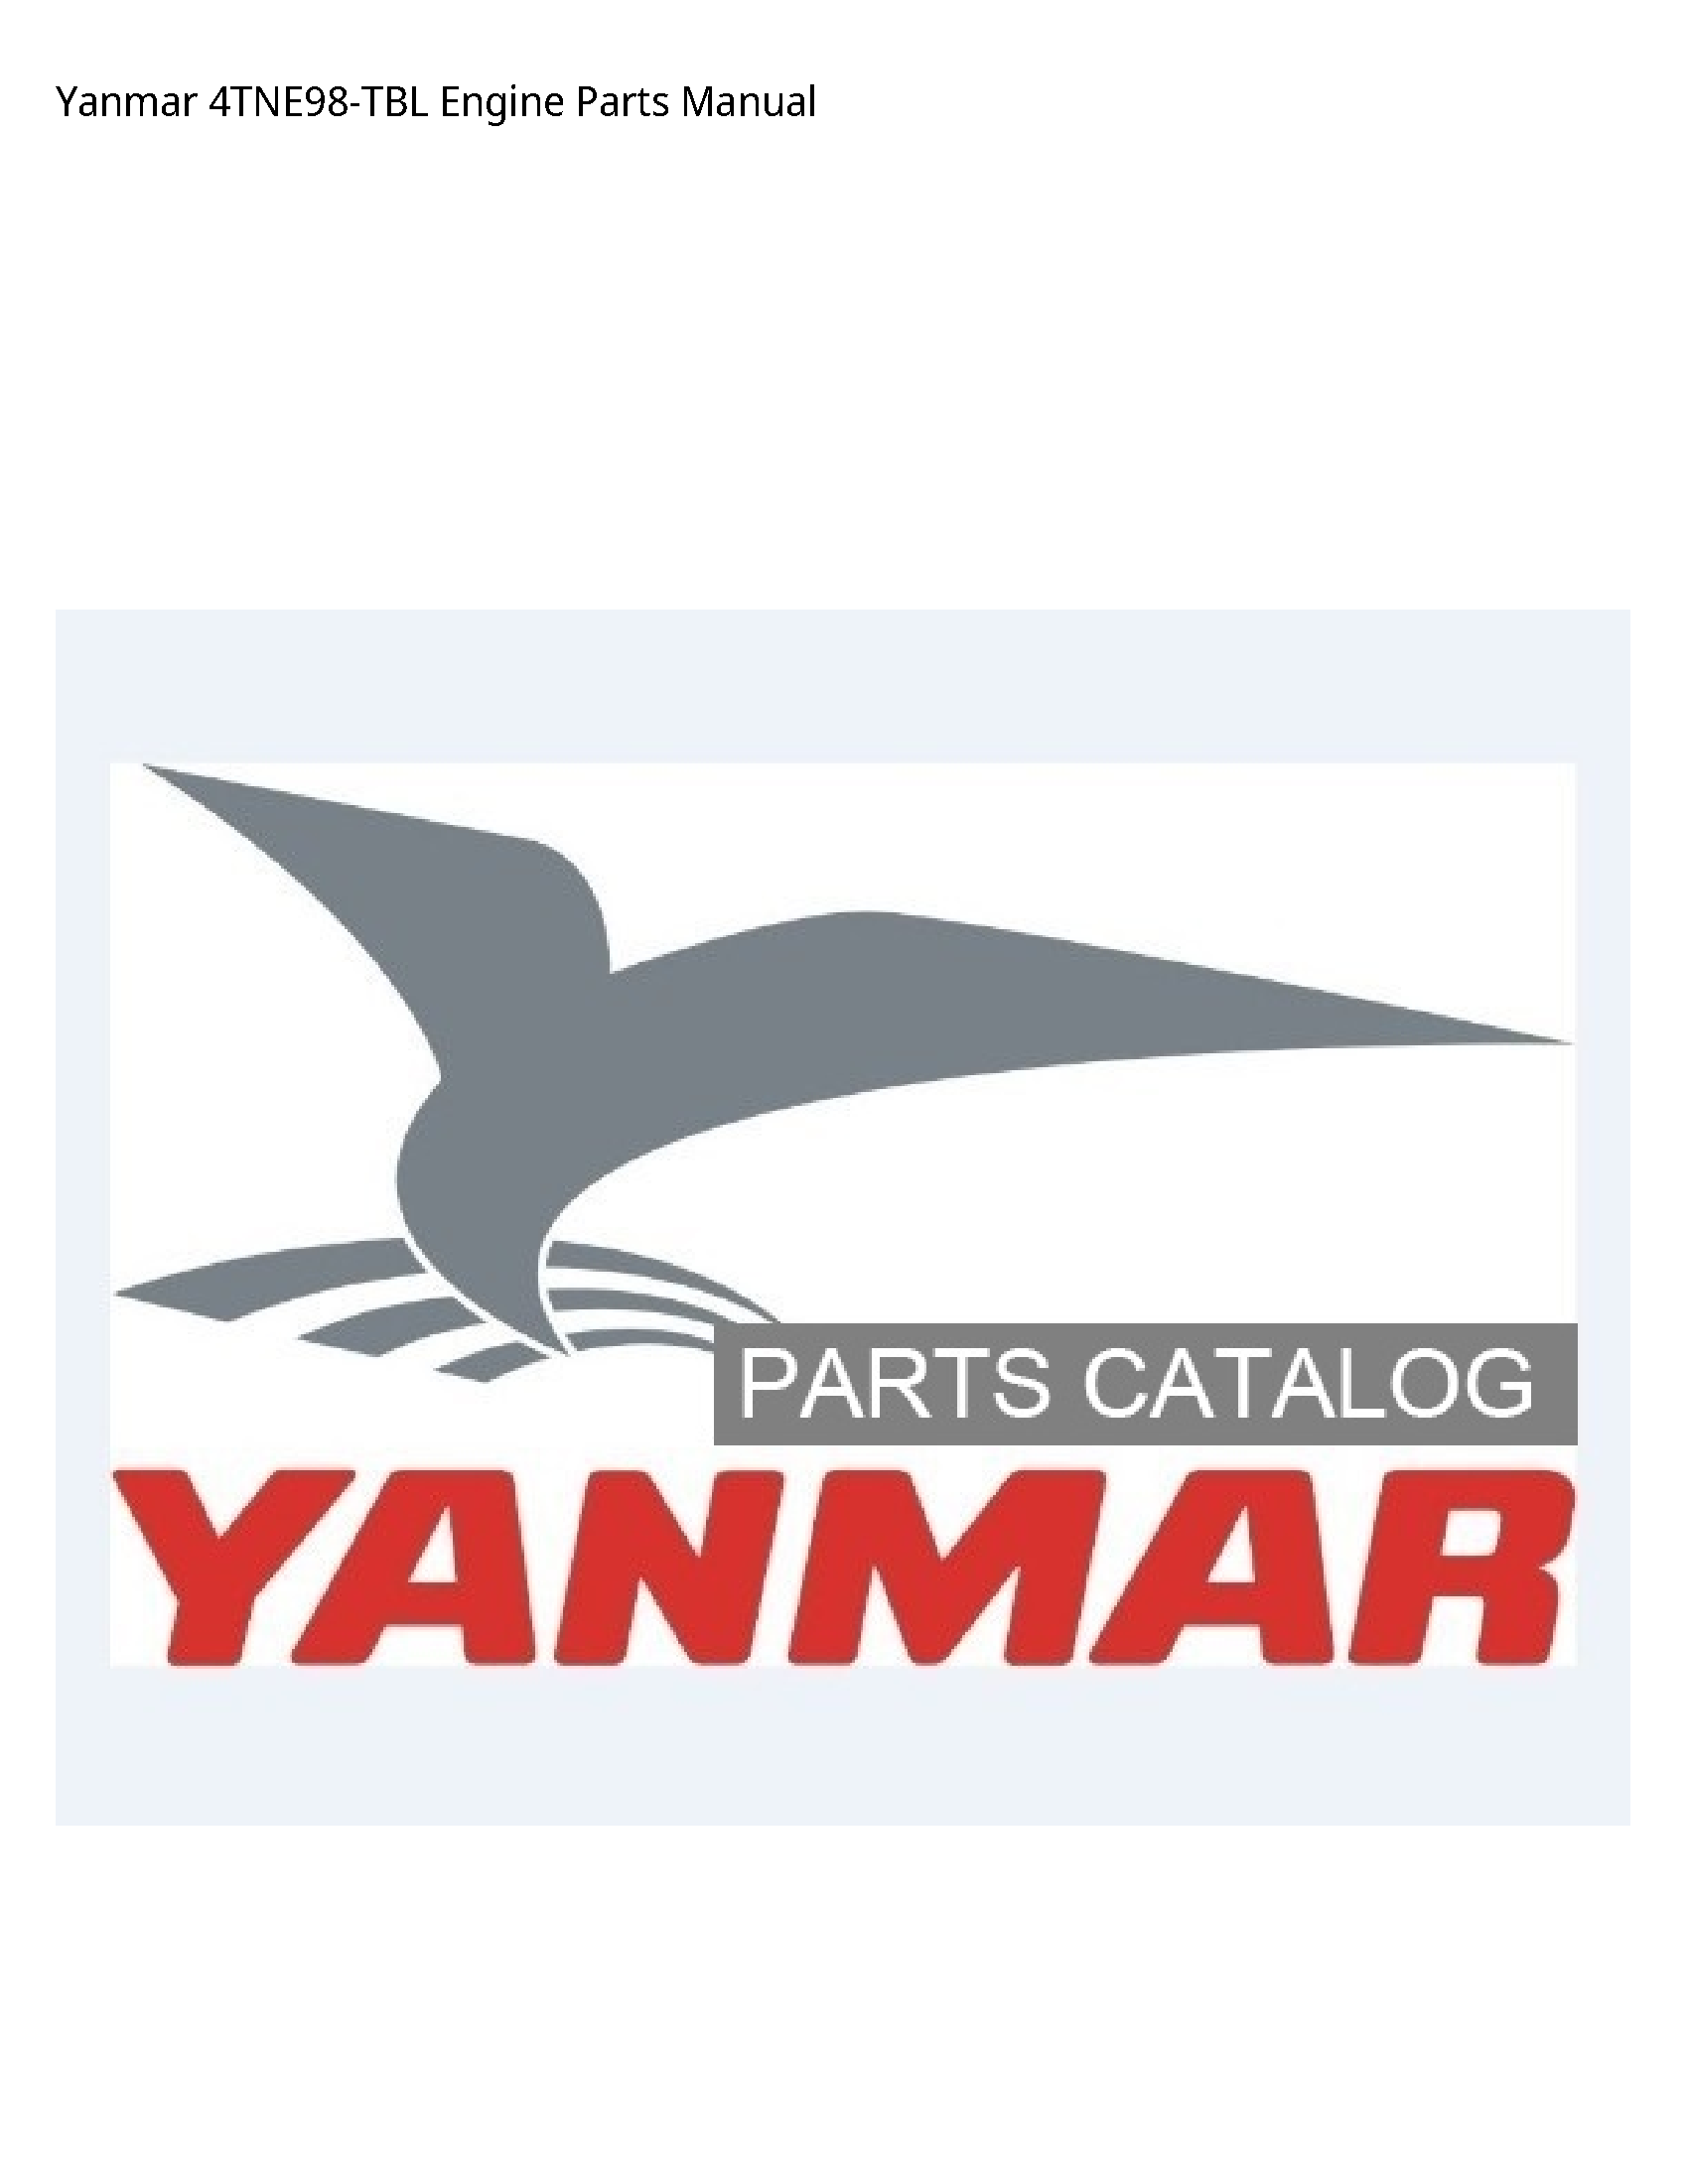 Yanmar 4TNE98-TBL Engine Parts manual